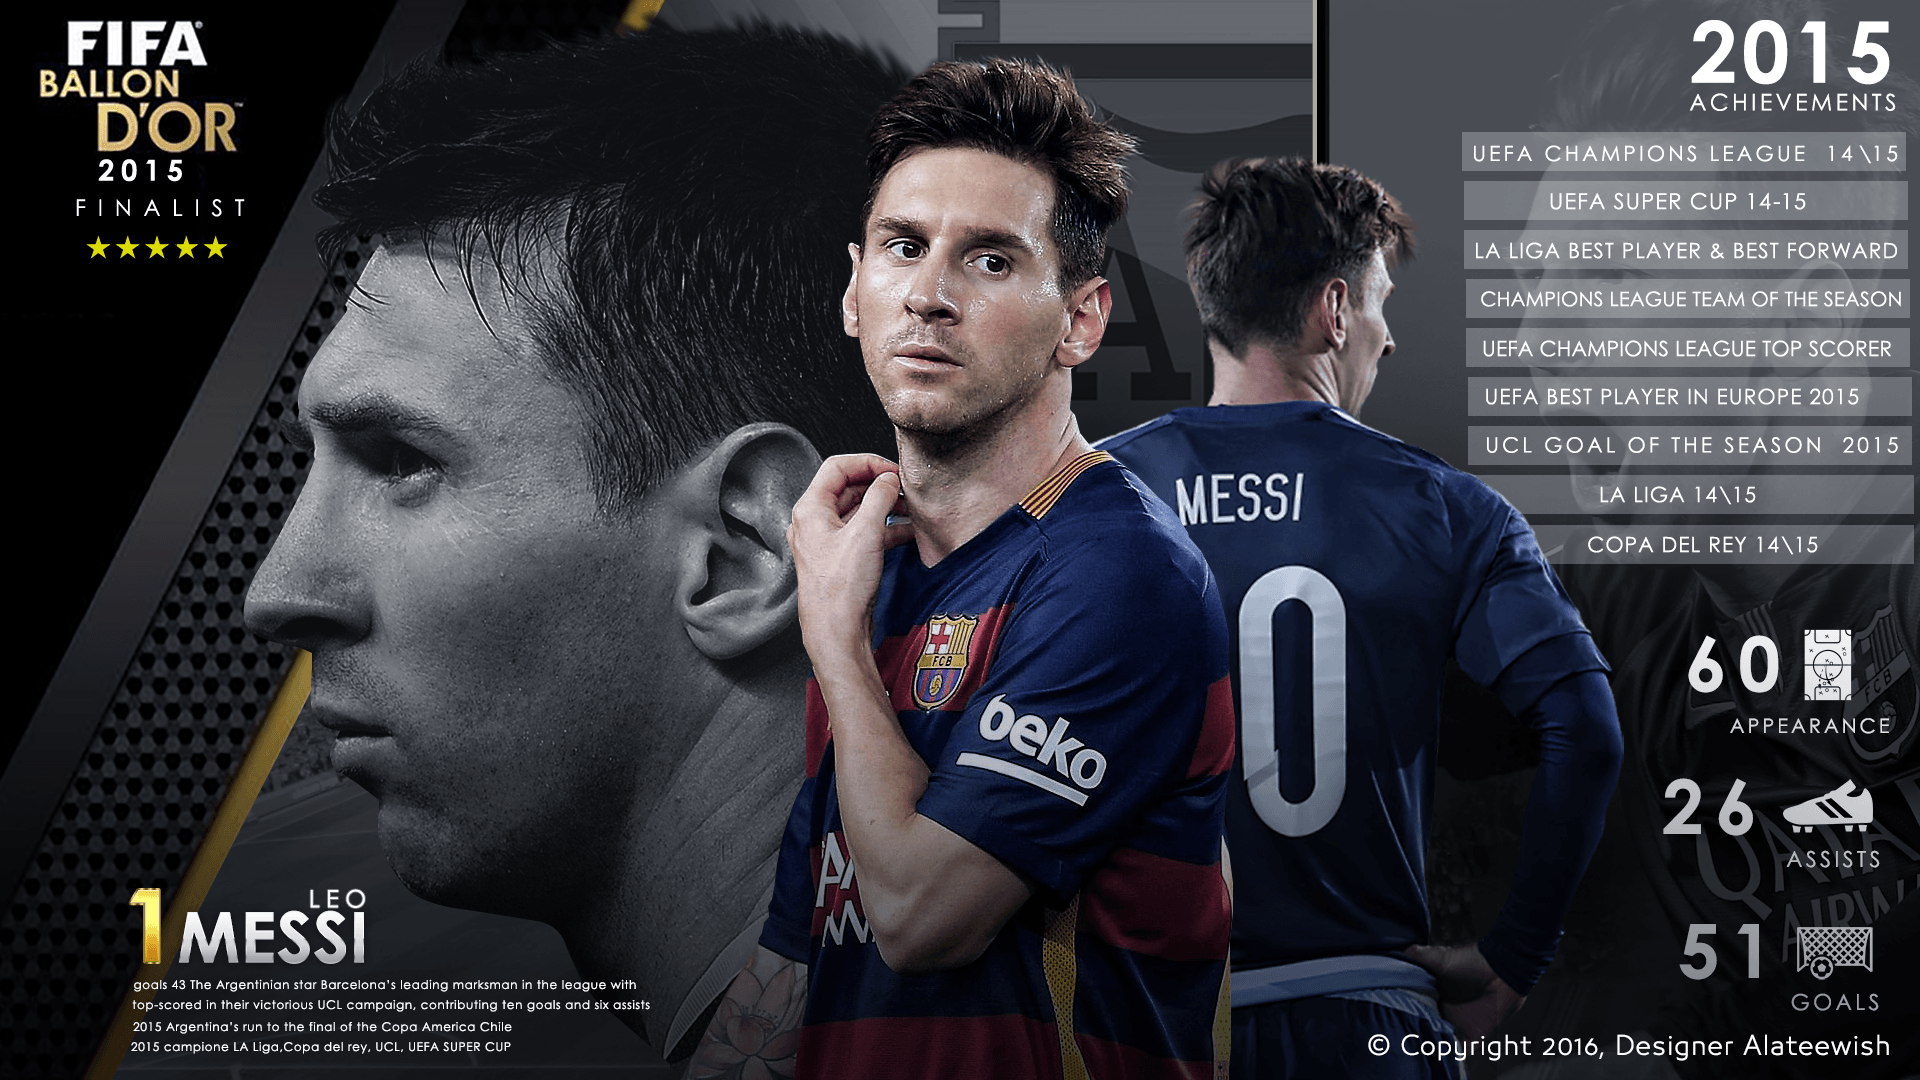 FIFA Ballon D'Or 2015 Finalist, Leo Messi By Designer Alateewish